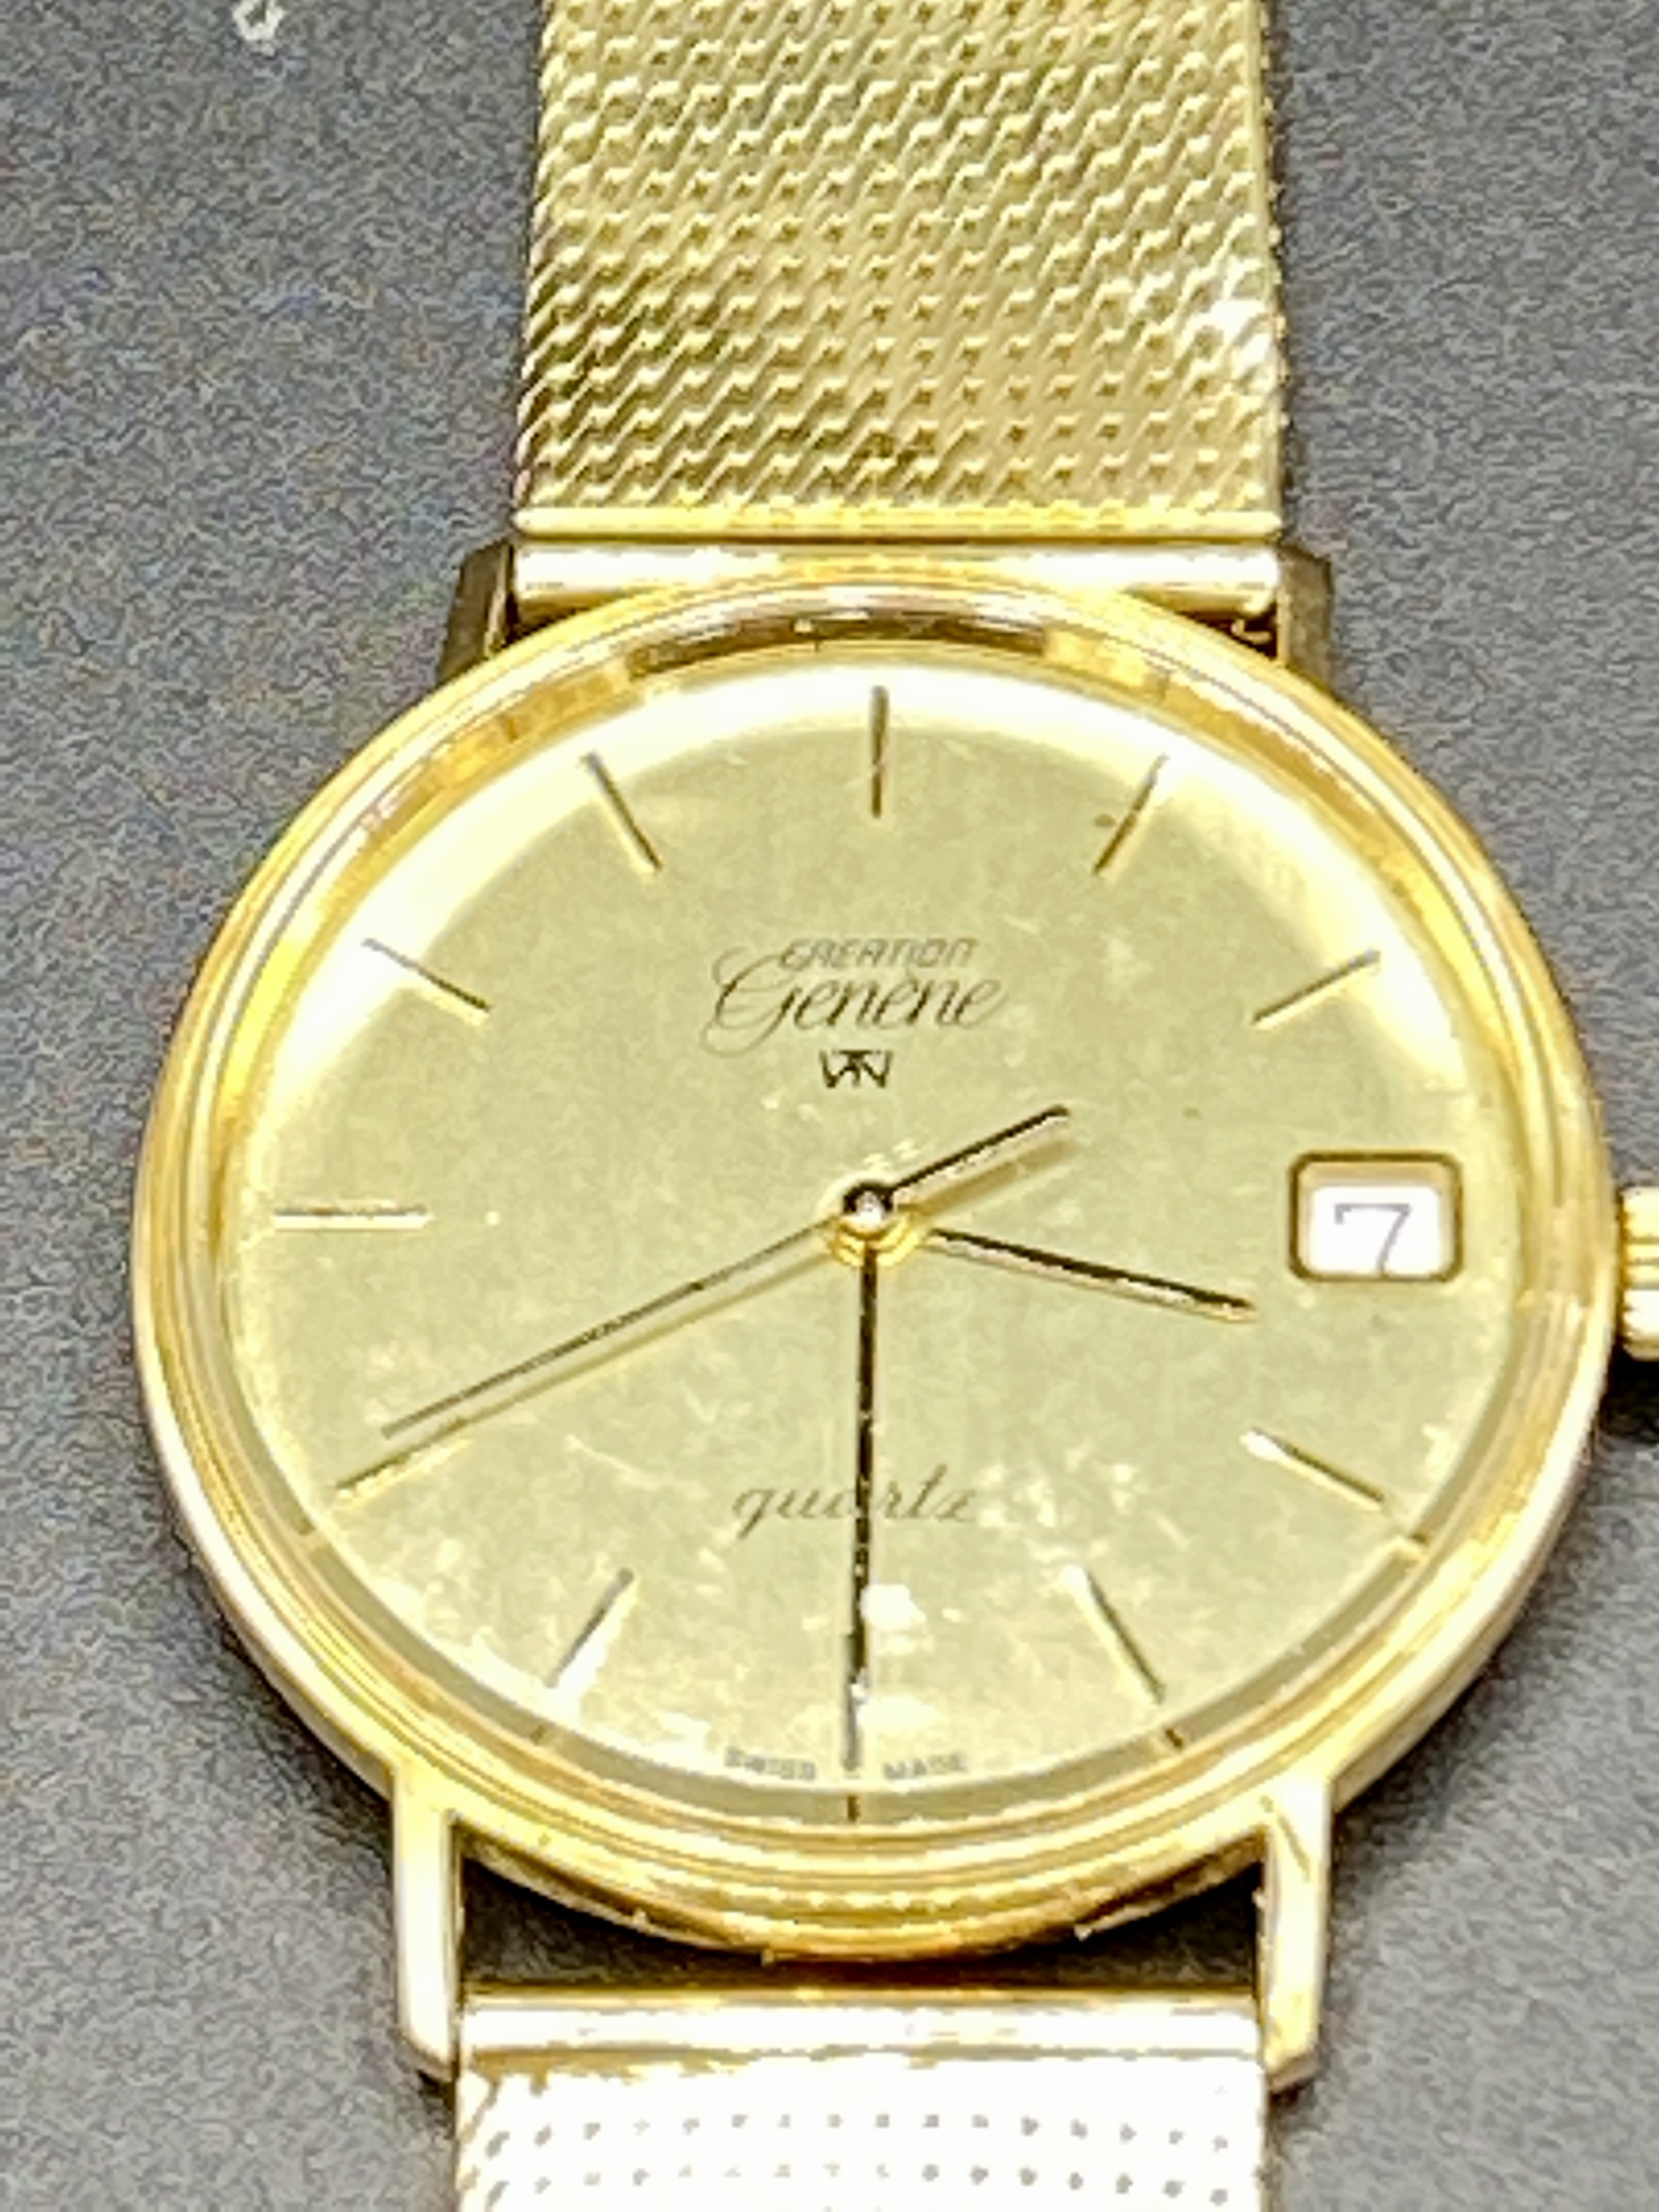 Creation Geneve 9ct gold case quartz wrist watch - Image 4 of 6